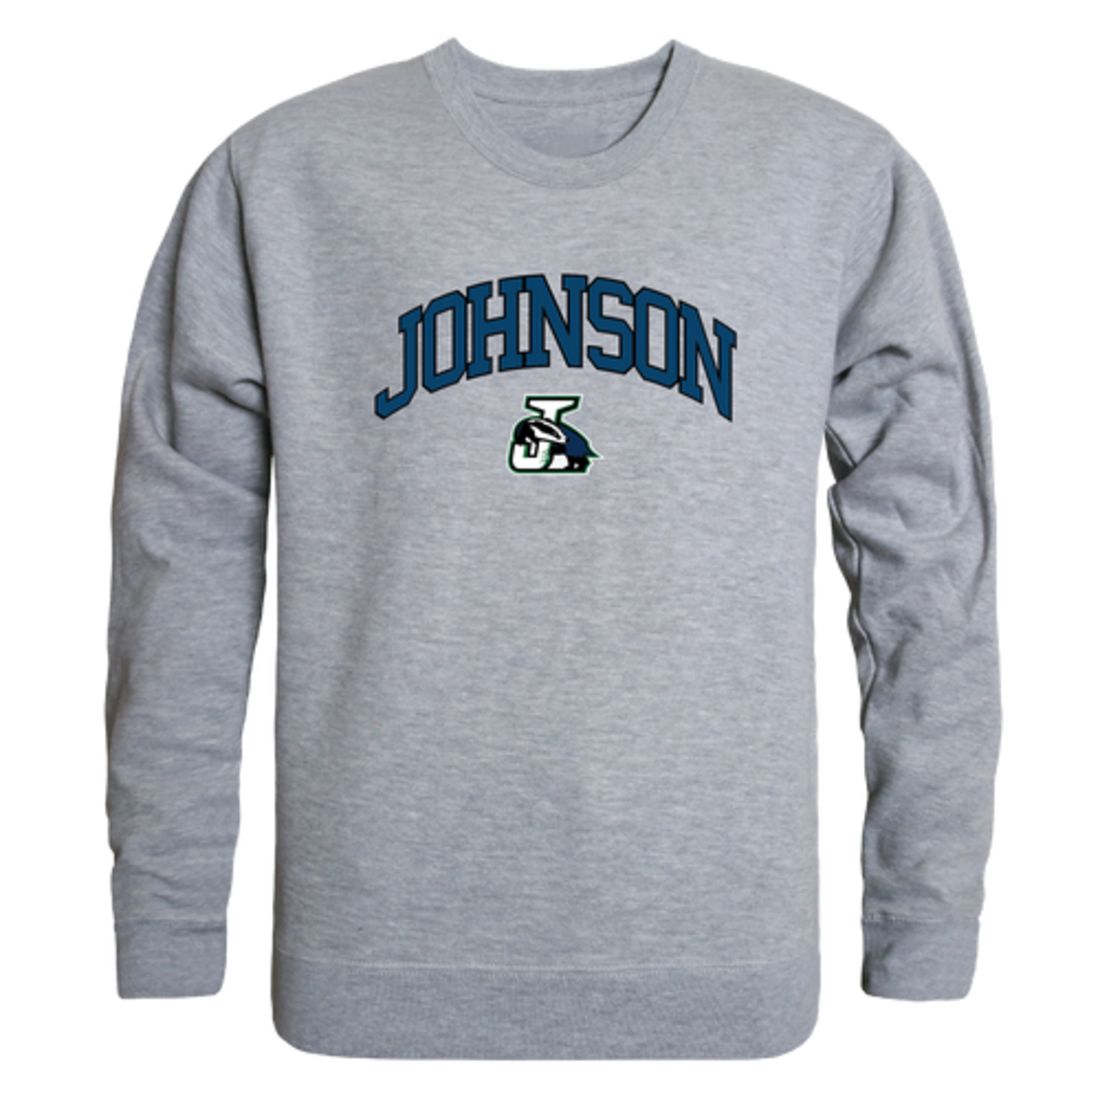 Northern Vermont University Badgers Campus Crewneck Sweatshirt